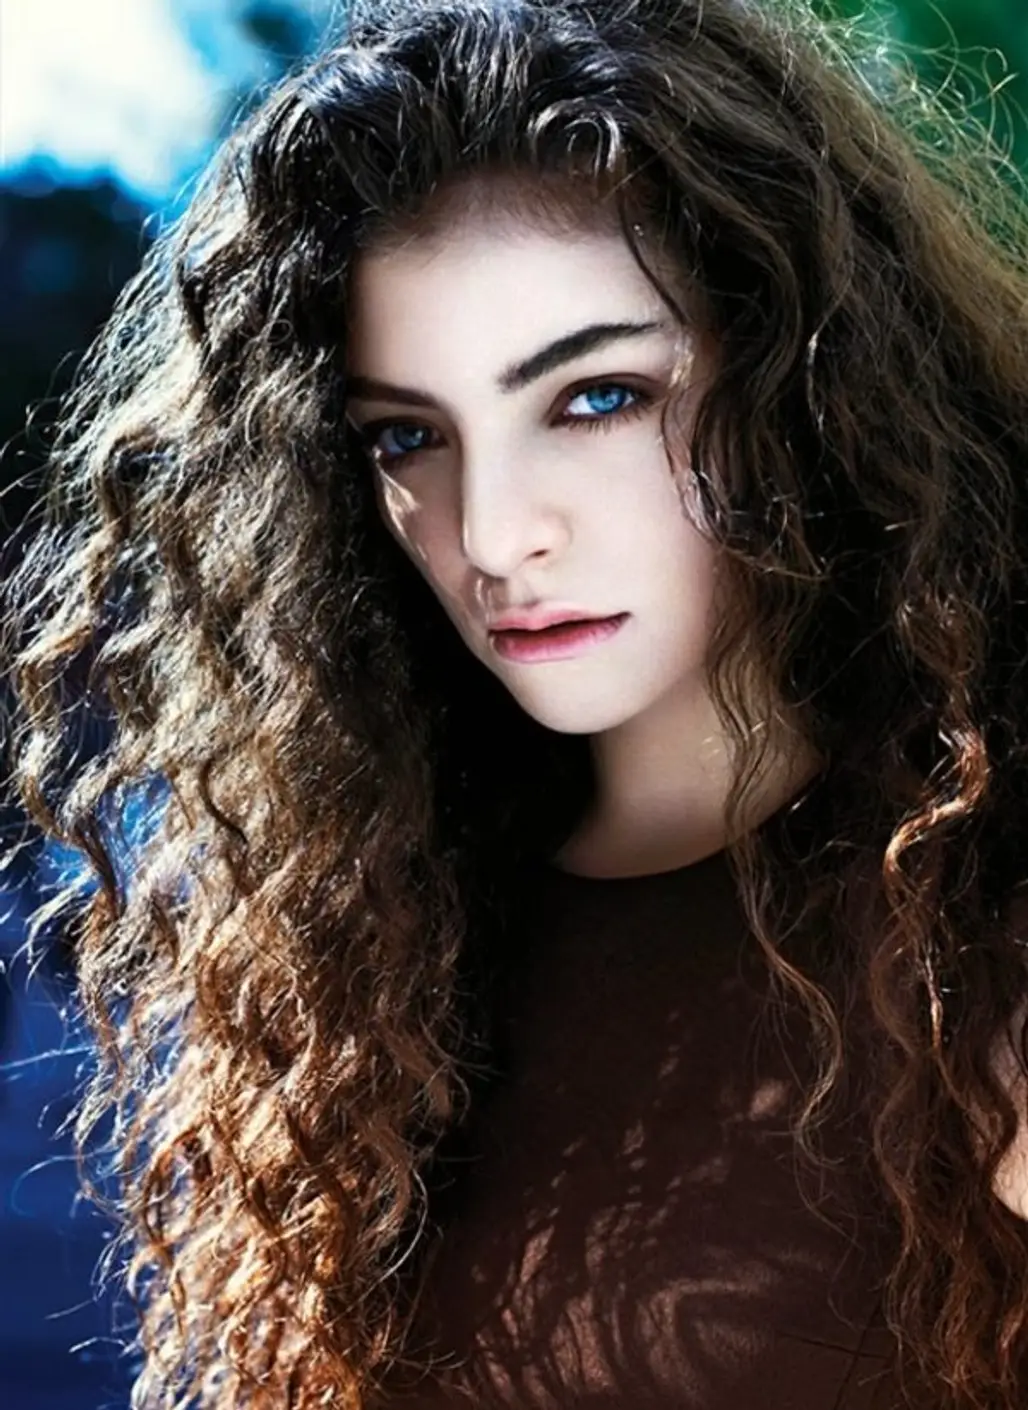 Lorde - September 14, 2014